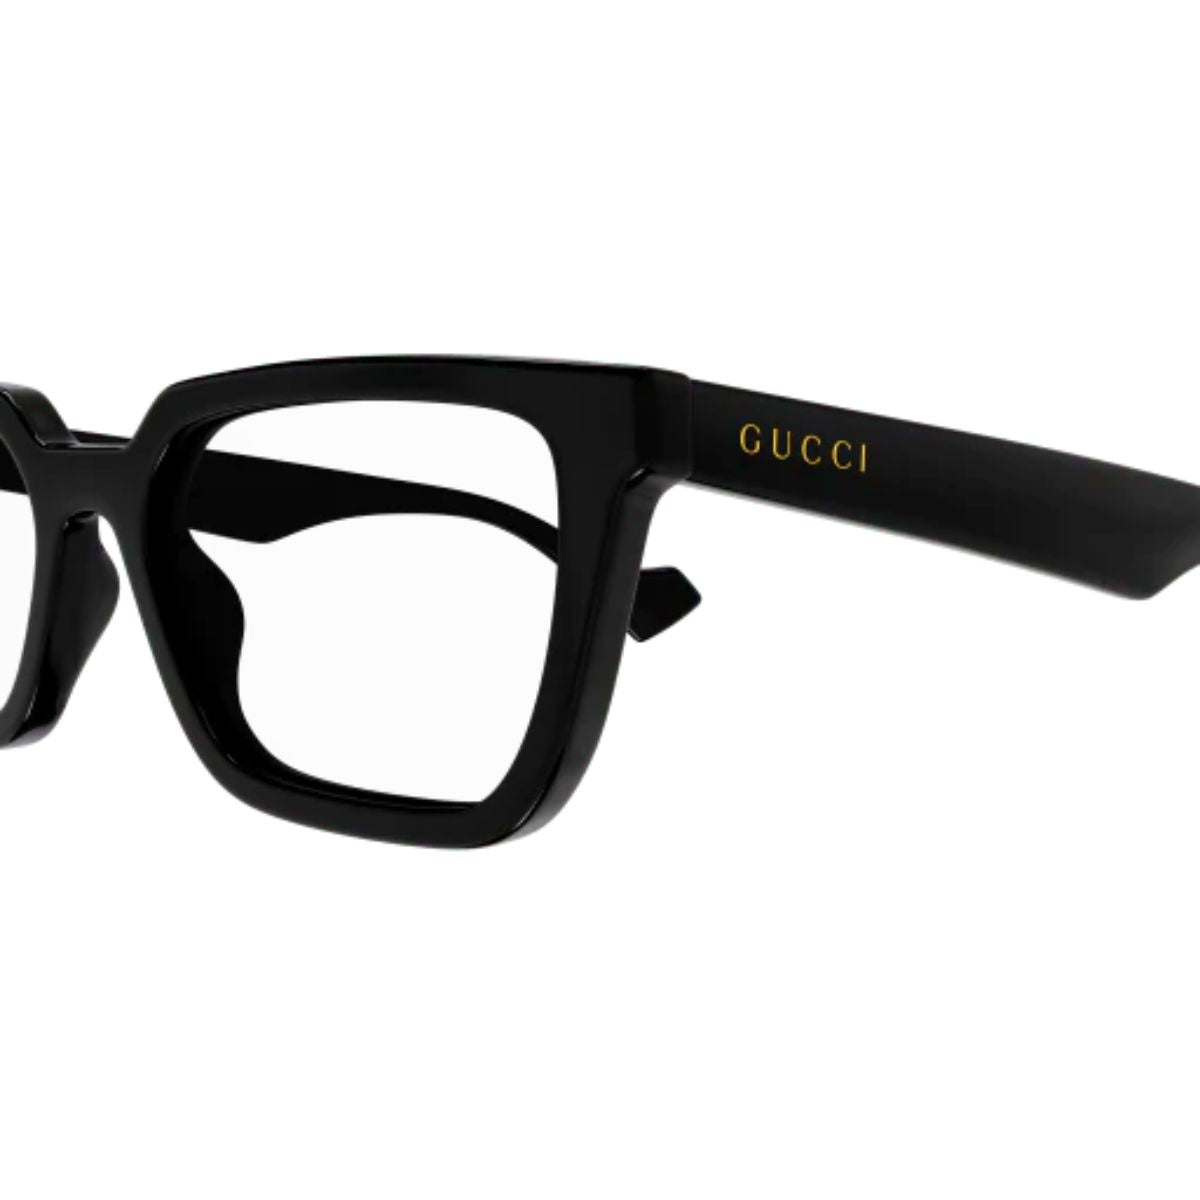 "Discover Diverse Glasses Frames for Men - Gucci 1539O 001 Frames at Optorium"